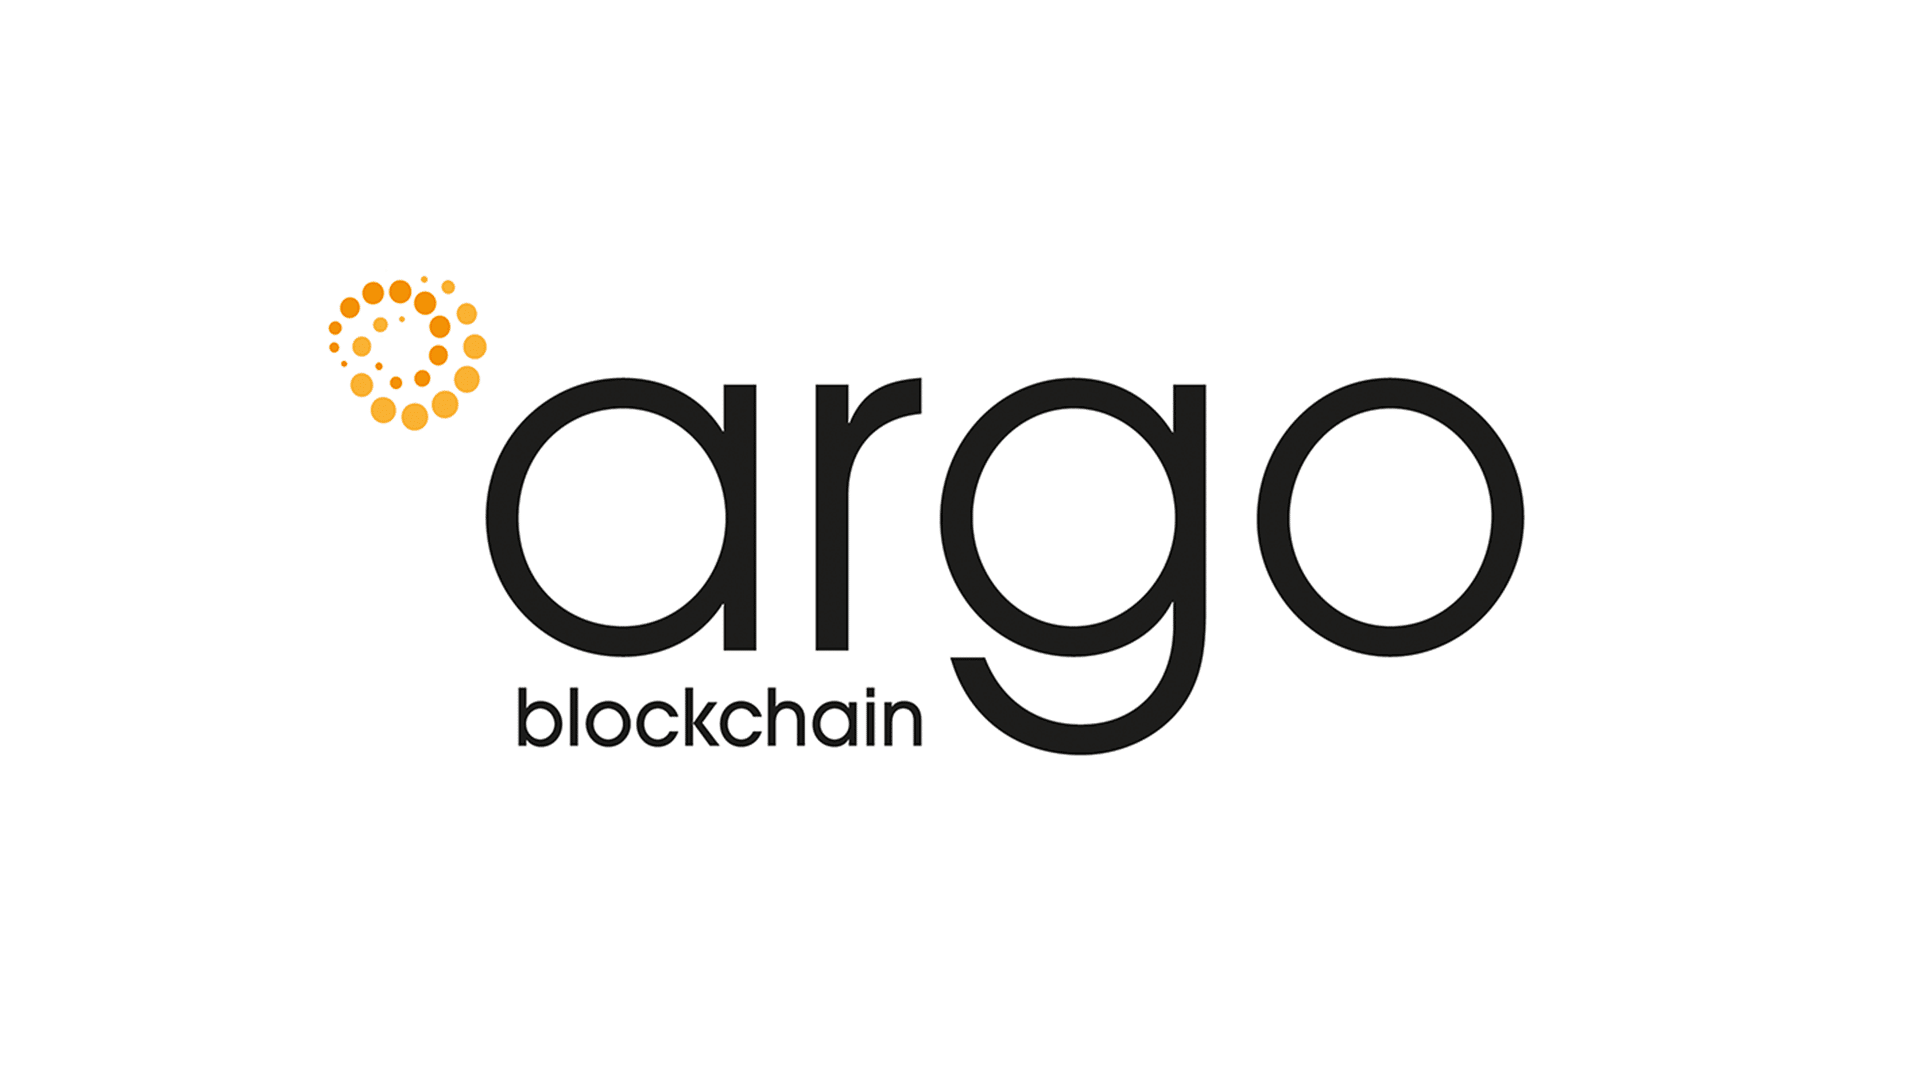 Argo Blockchain minerou 25% menos Bitcoins em maio